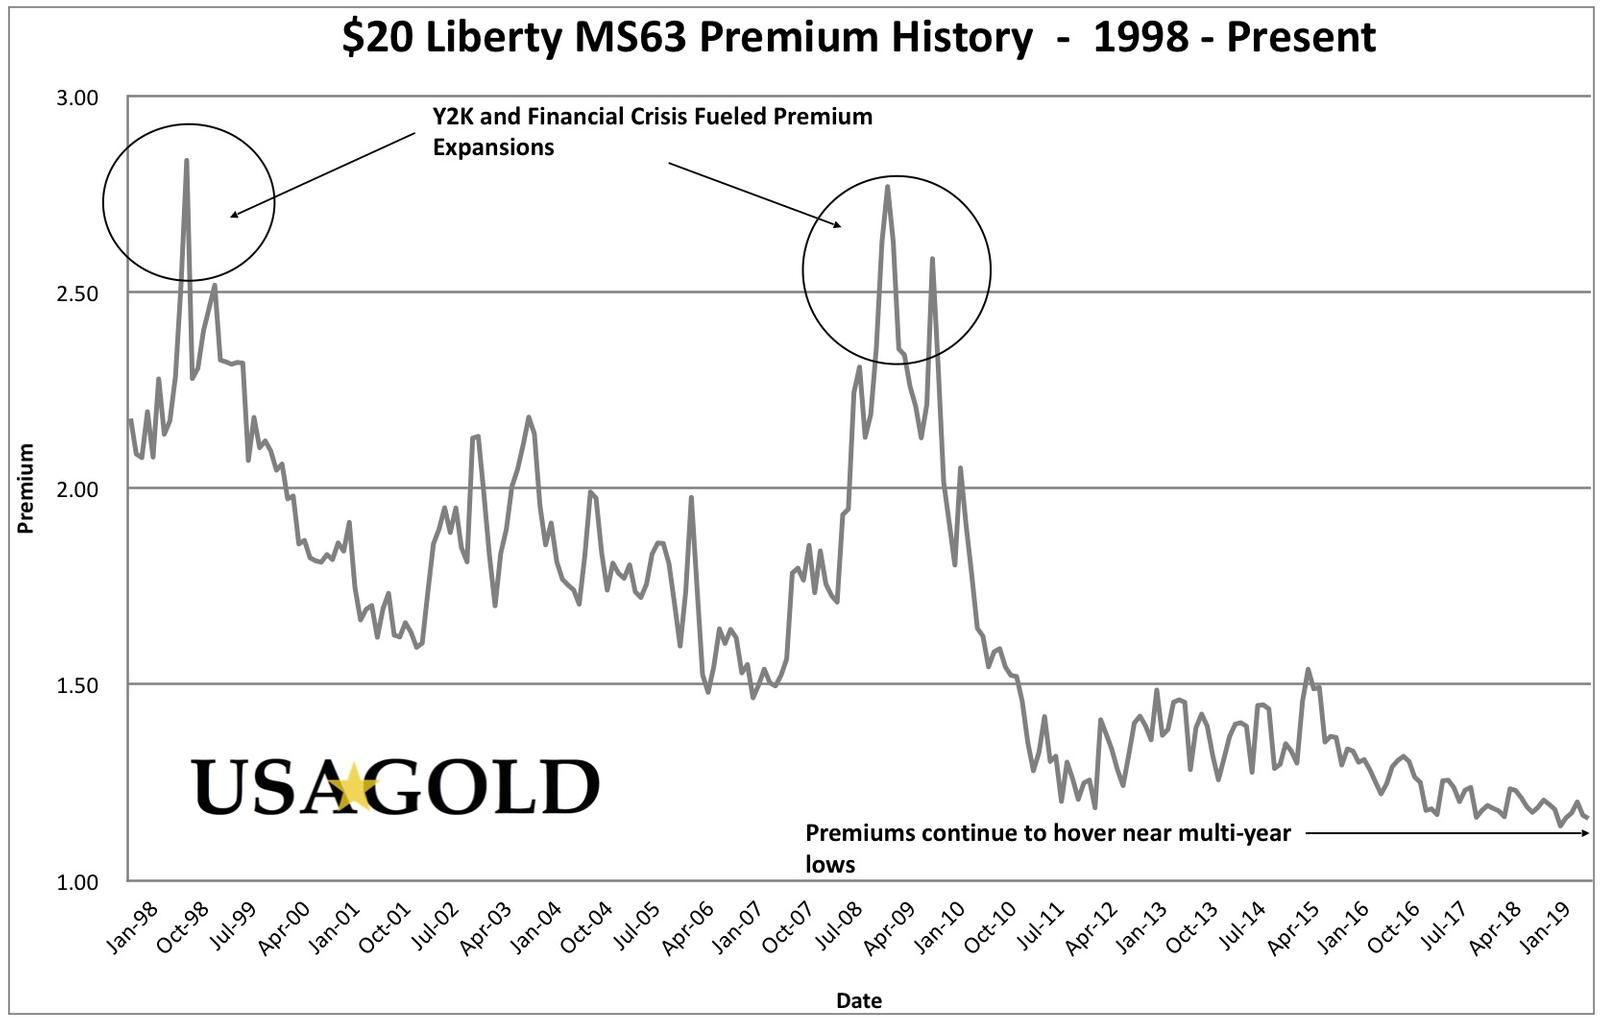 Line chart of premium history of $20 liberty MS 63